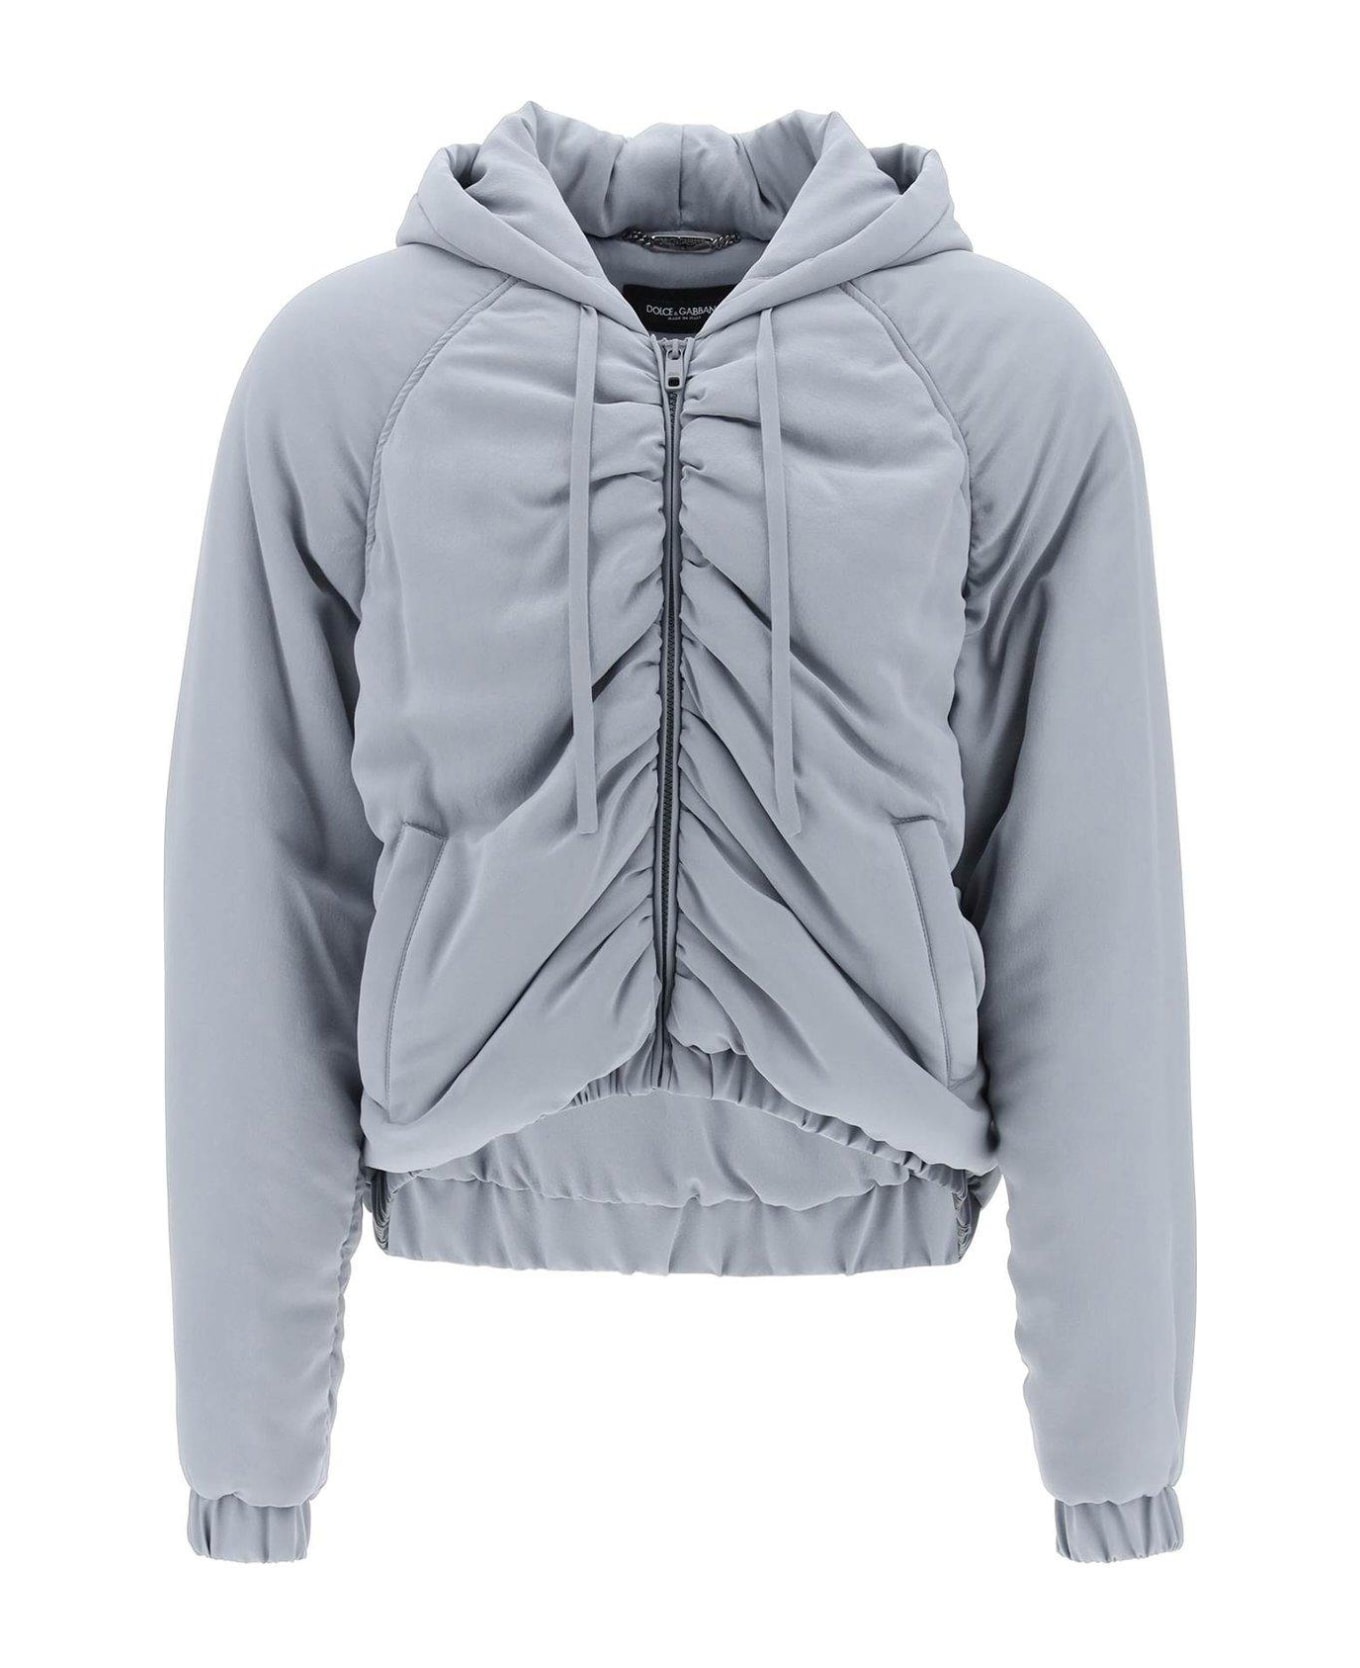 Dolce & Gabbana Drawstring Hooded Jacket - GRIGIO CHIARO 6 (Grey)